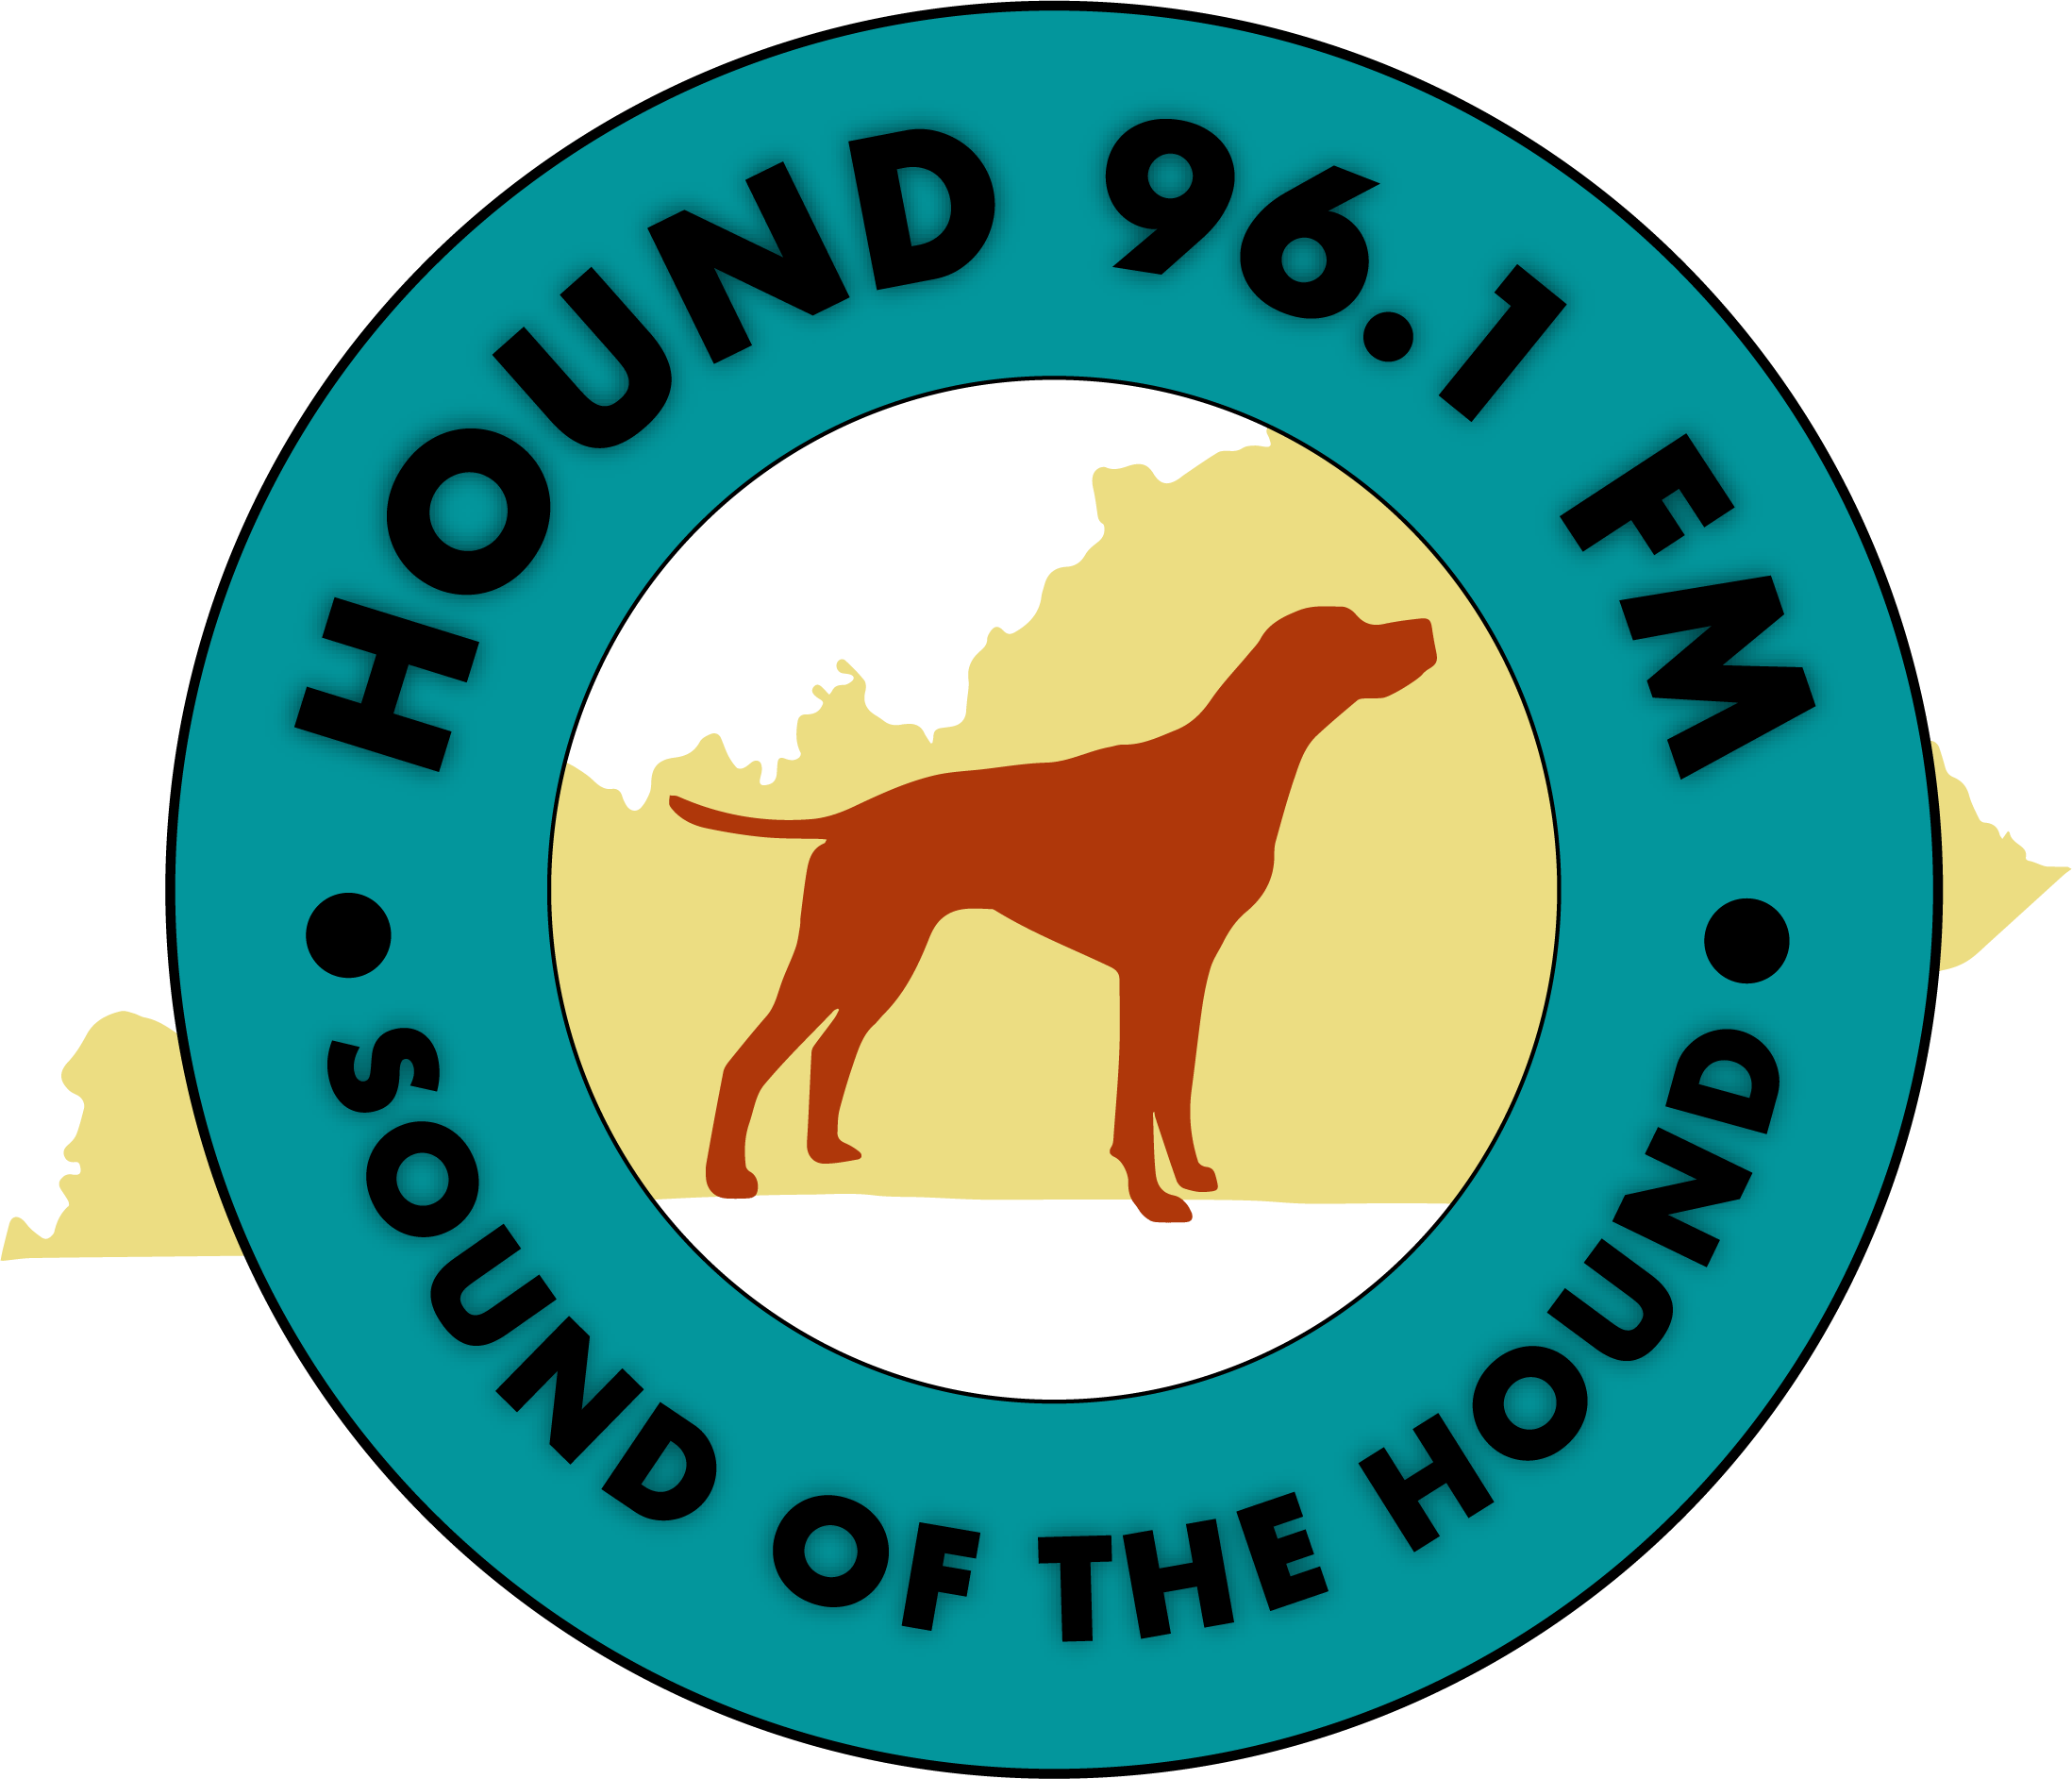 new-hound-logo-layers-white-bckgrnd-2